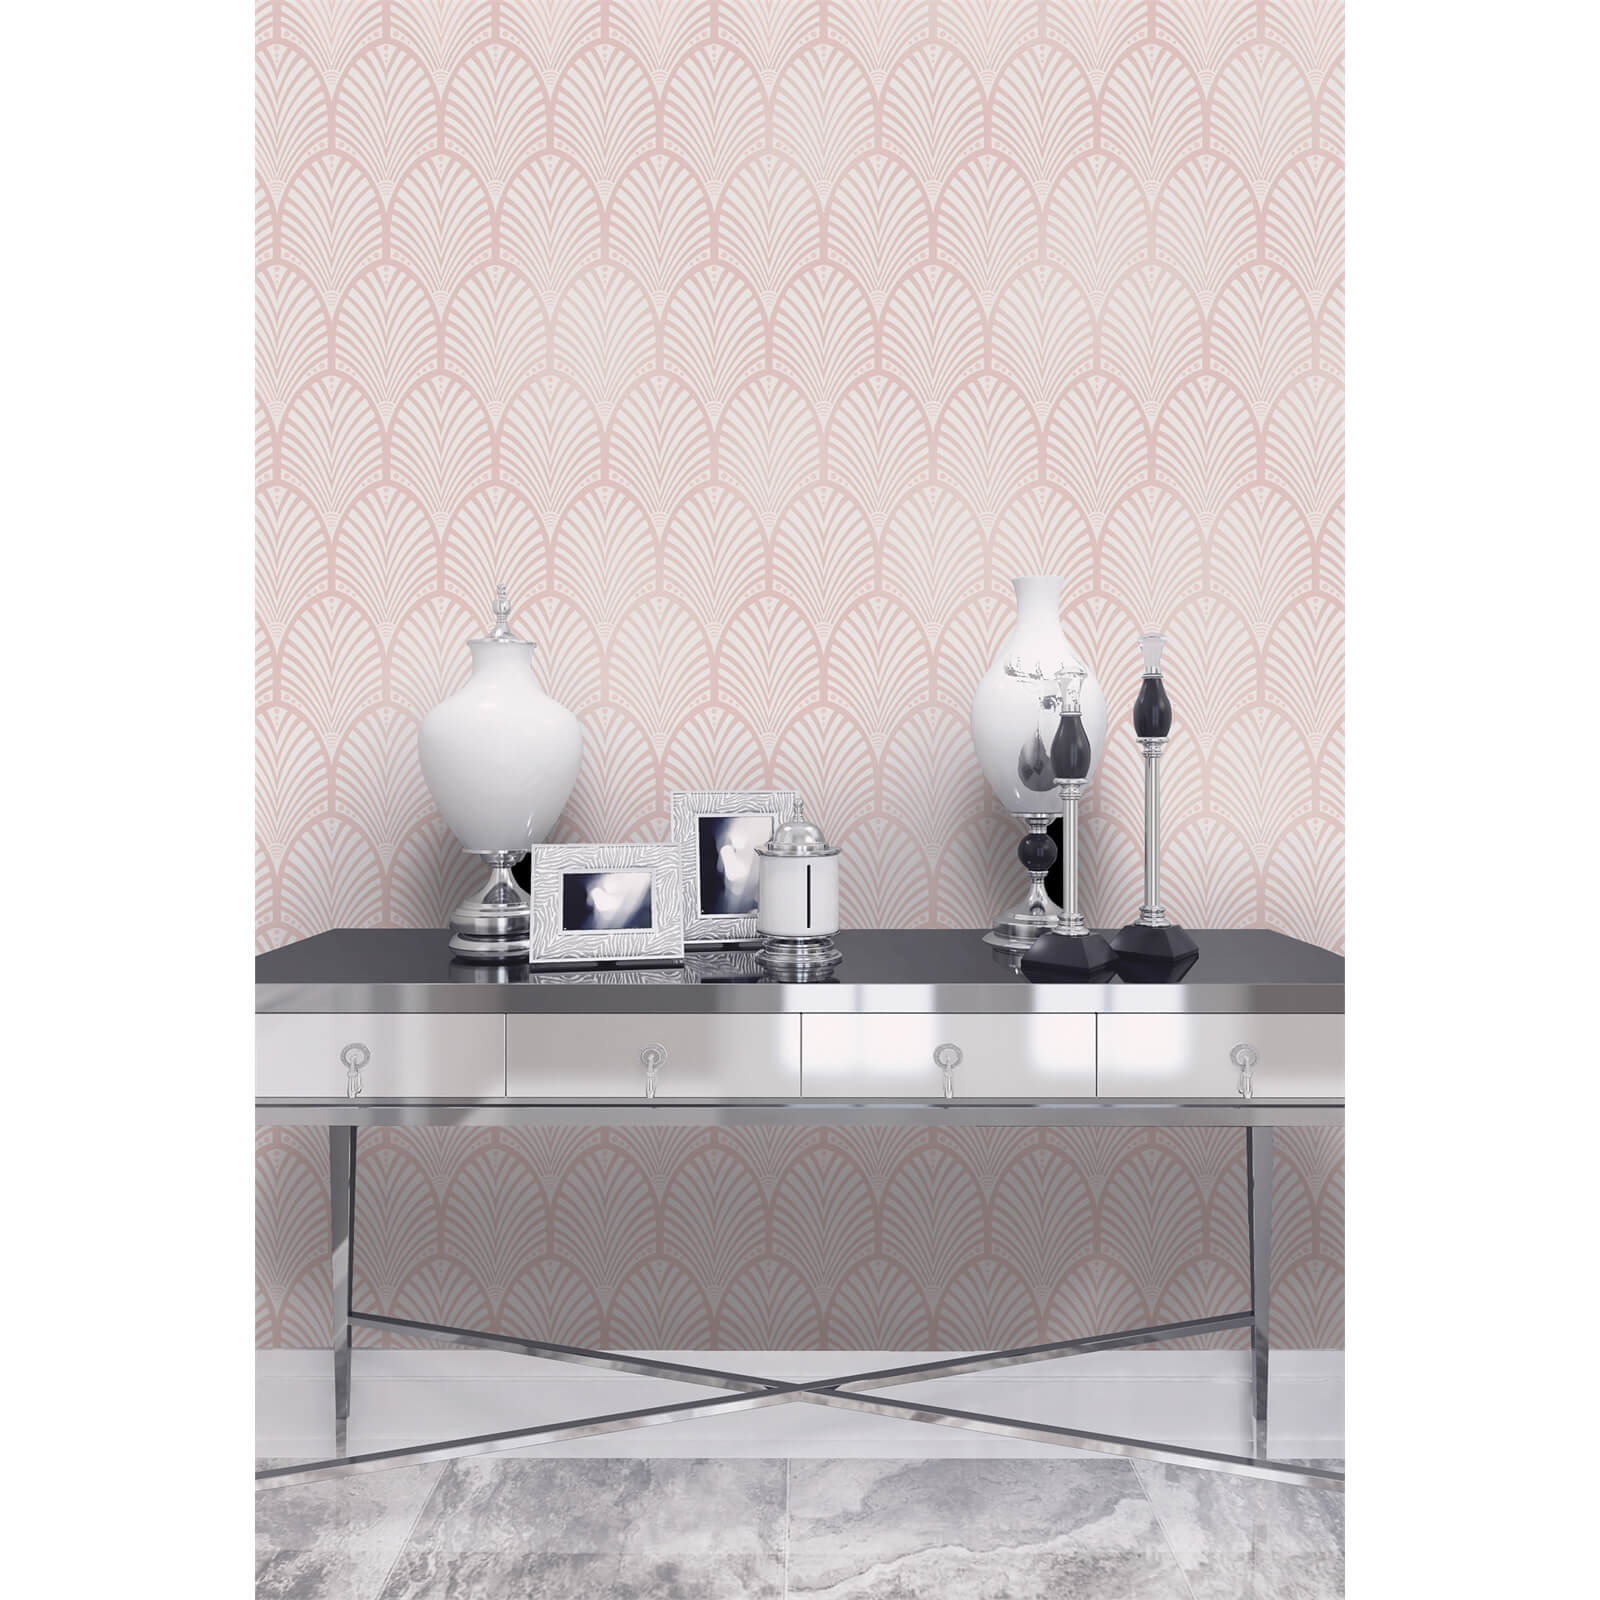 Holden Decor Gatsby Art Deco Geometric Smooth Metallic Dusky Pink Wallpaper